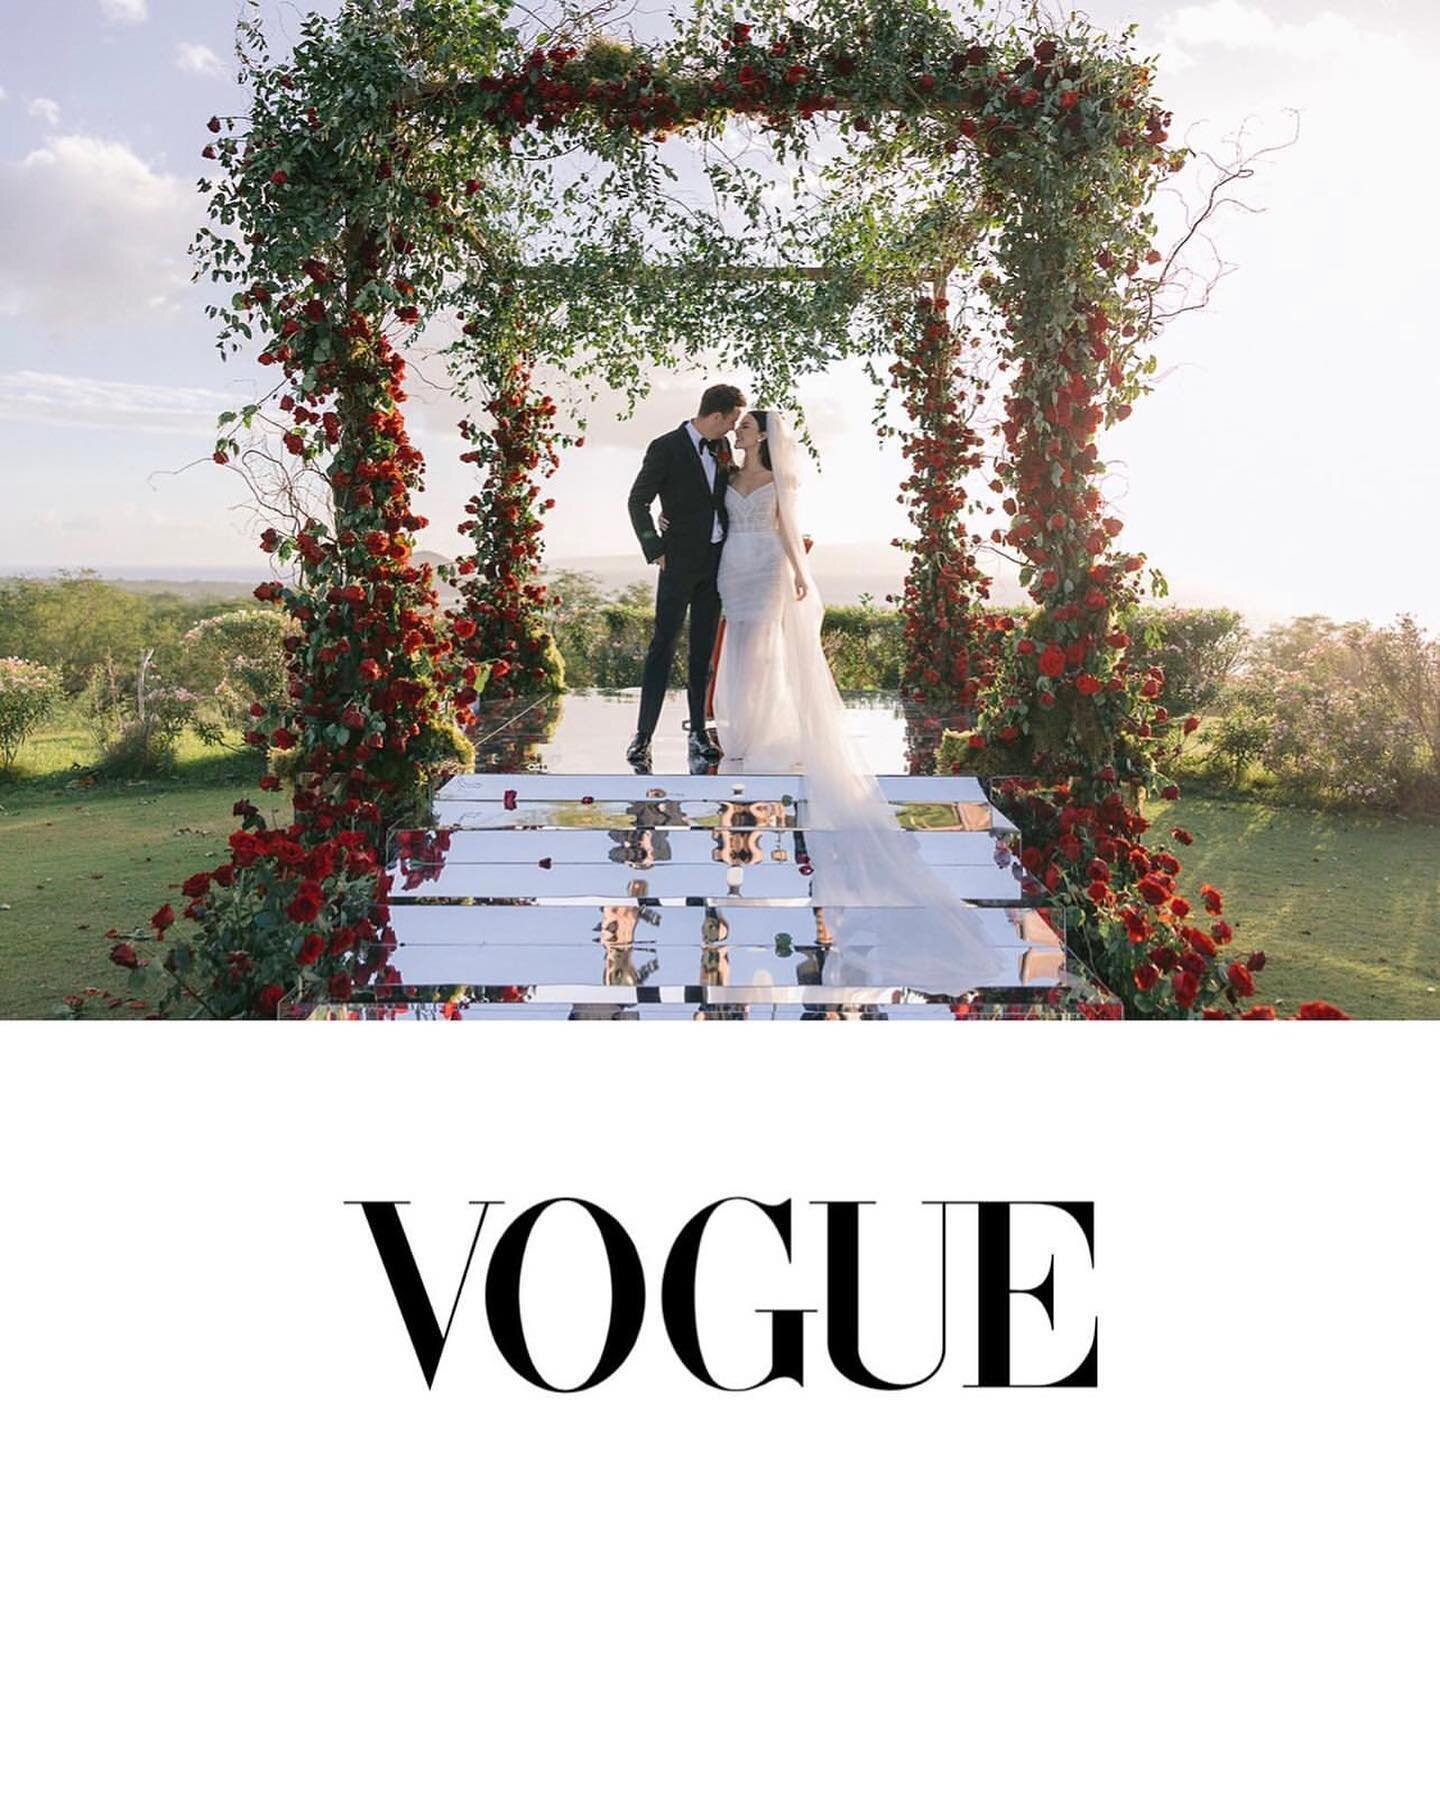 In Vogue 🥀 The bride wore @galialahav to her darkly romantic wedding on the island of Maui @vogueweddings 

@jadeiovine @bestevents @brejanephoto @callumwalkerhutchinson @refineryrentalshawaii @artisan.events.maui